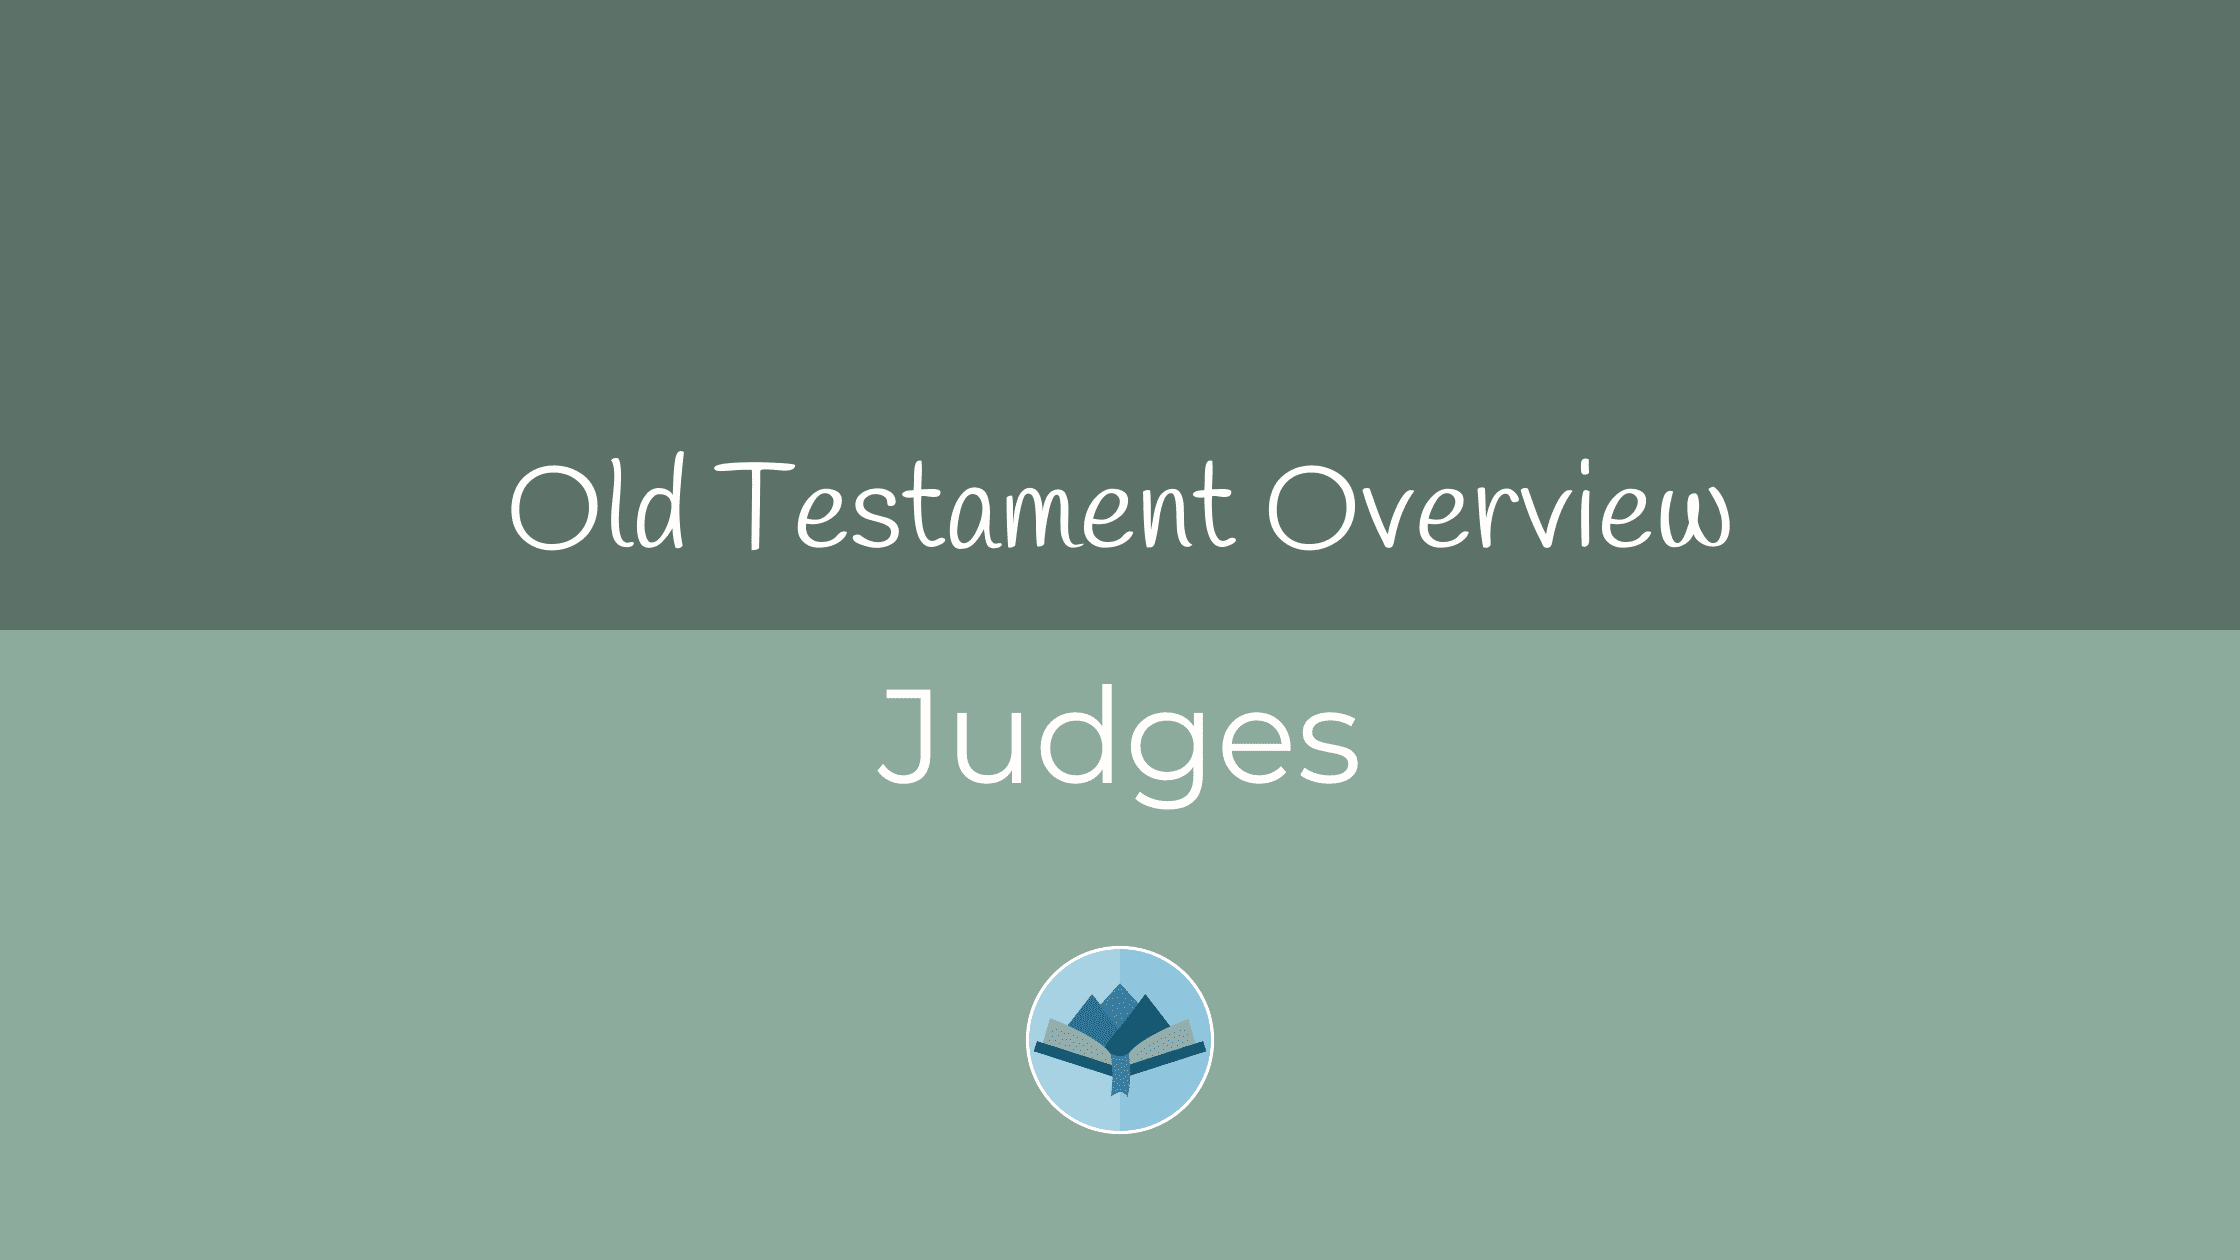 Judges Overview